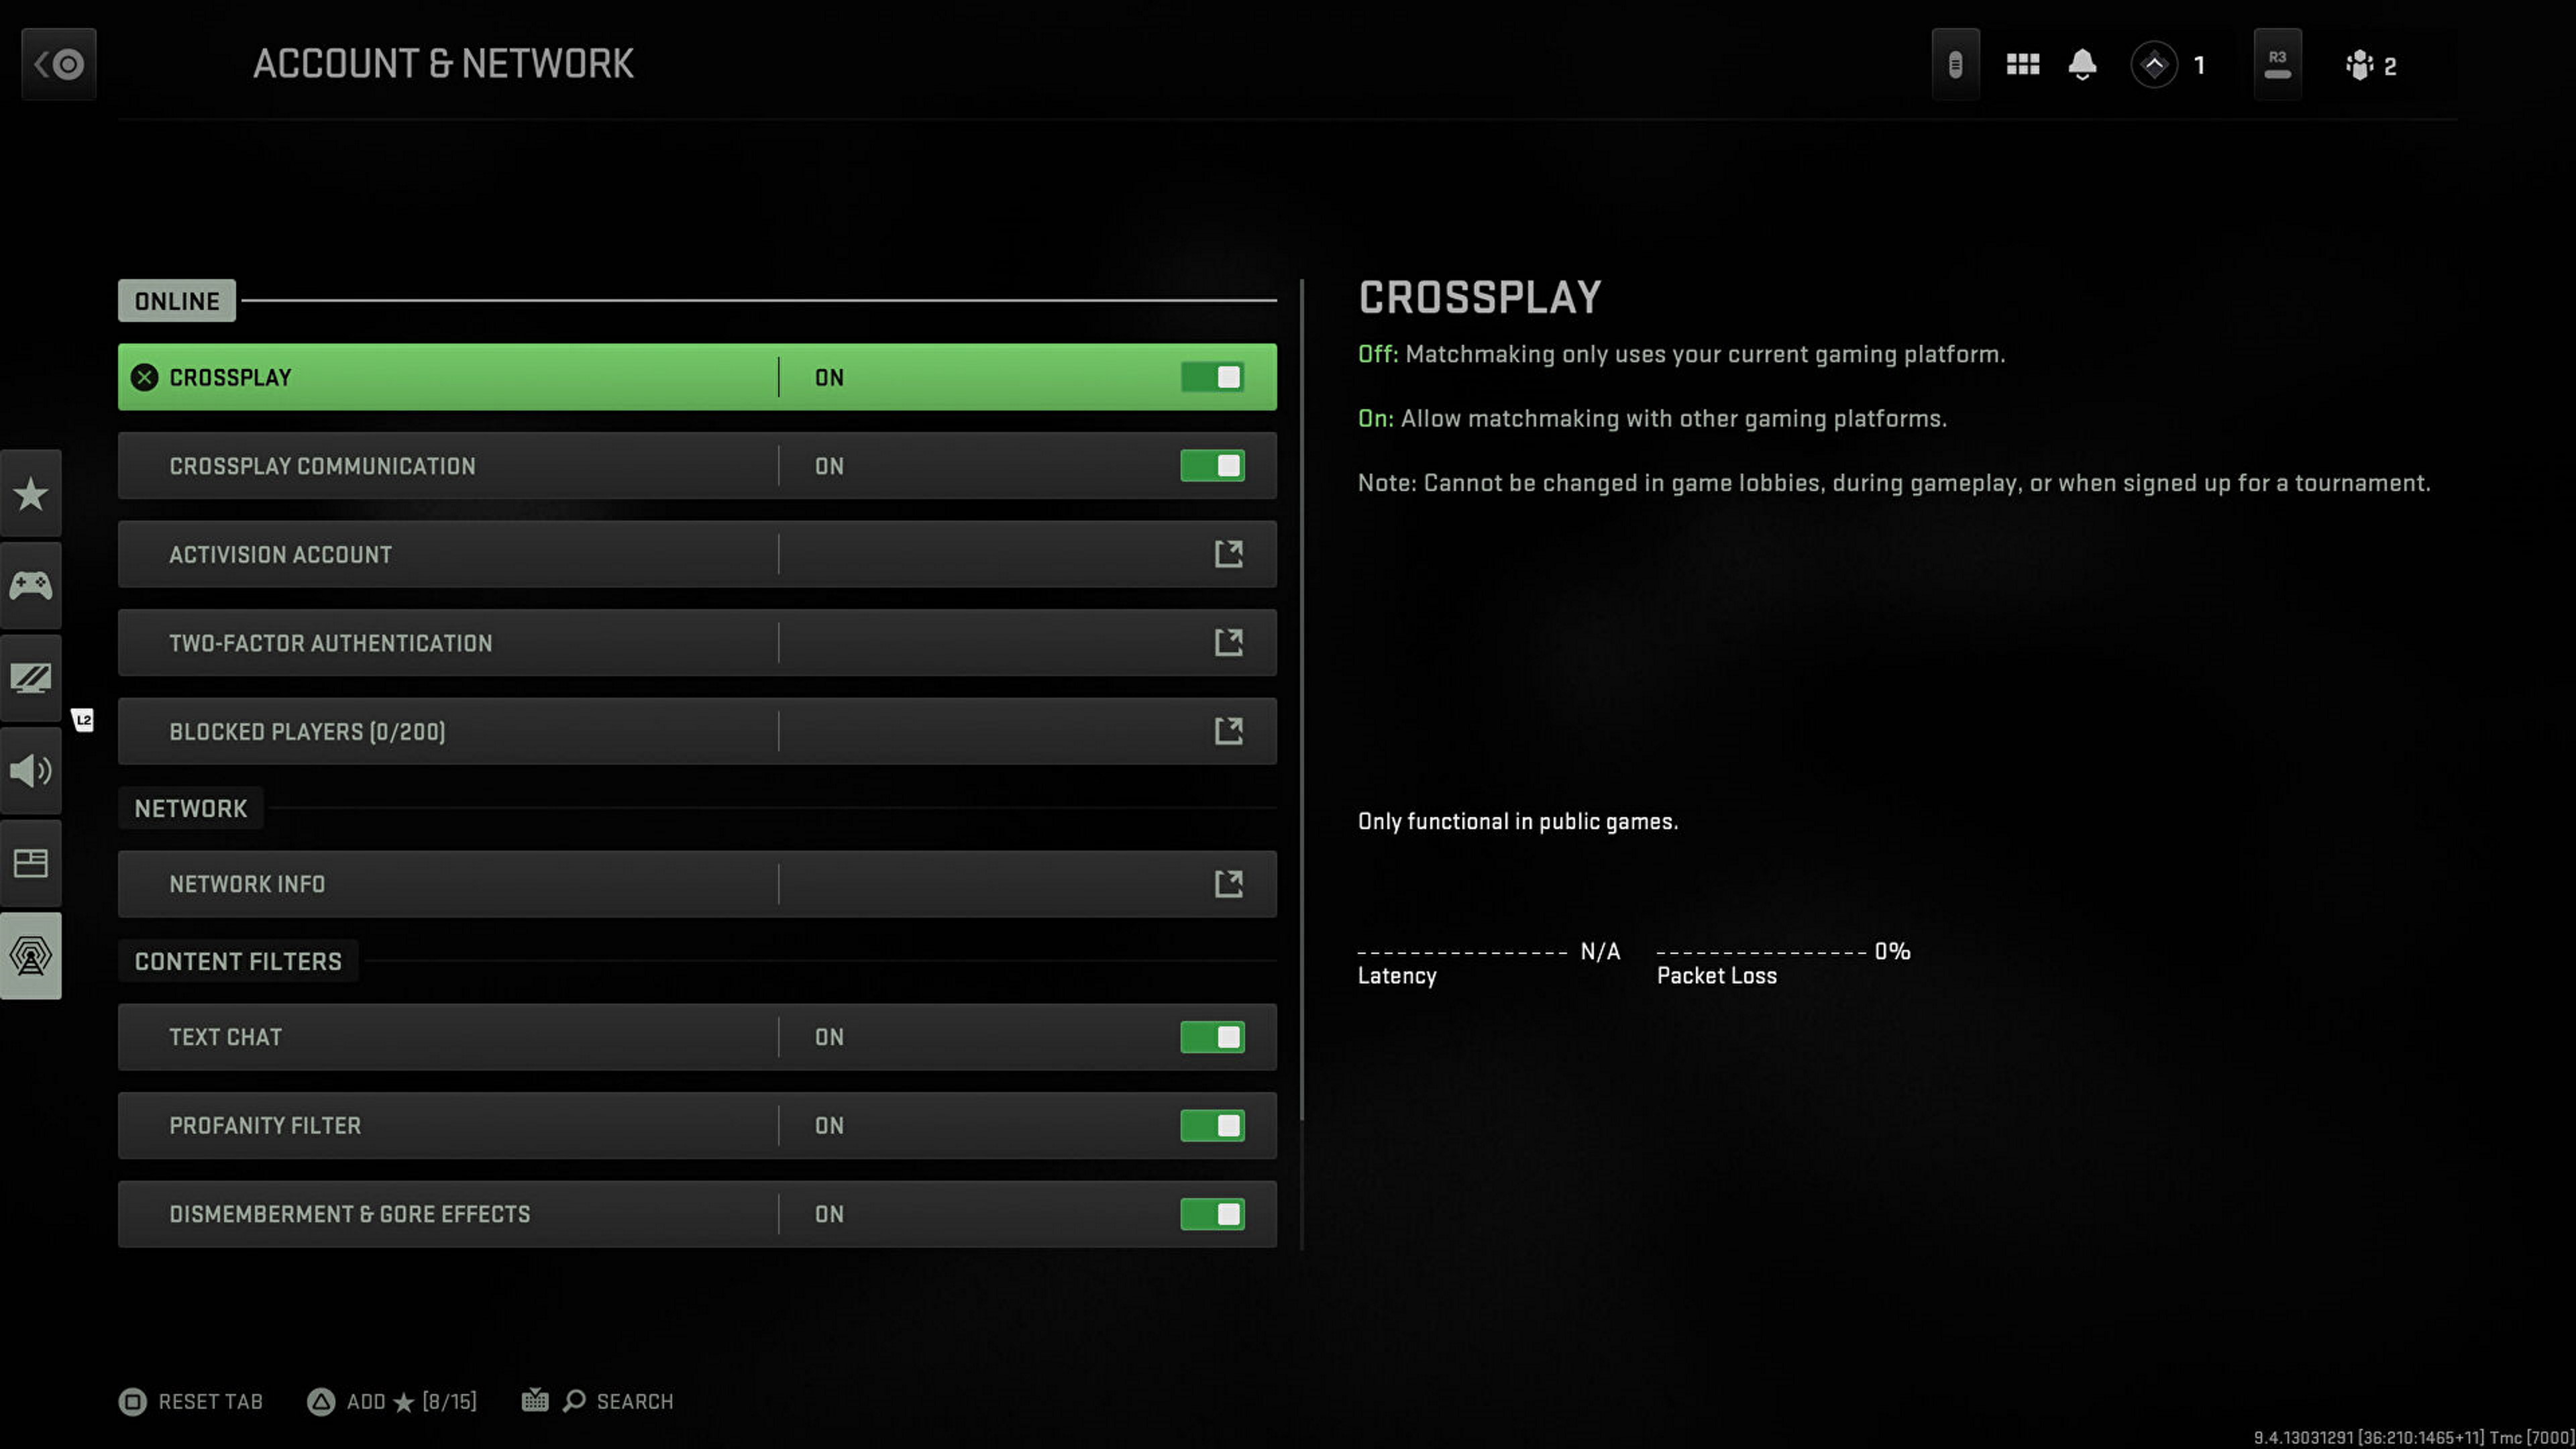 Call of Duty: Modern Warfare 2 online settings menu